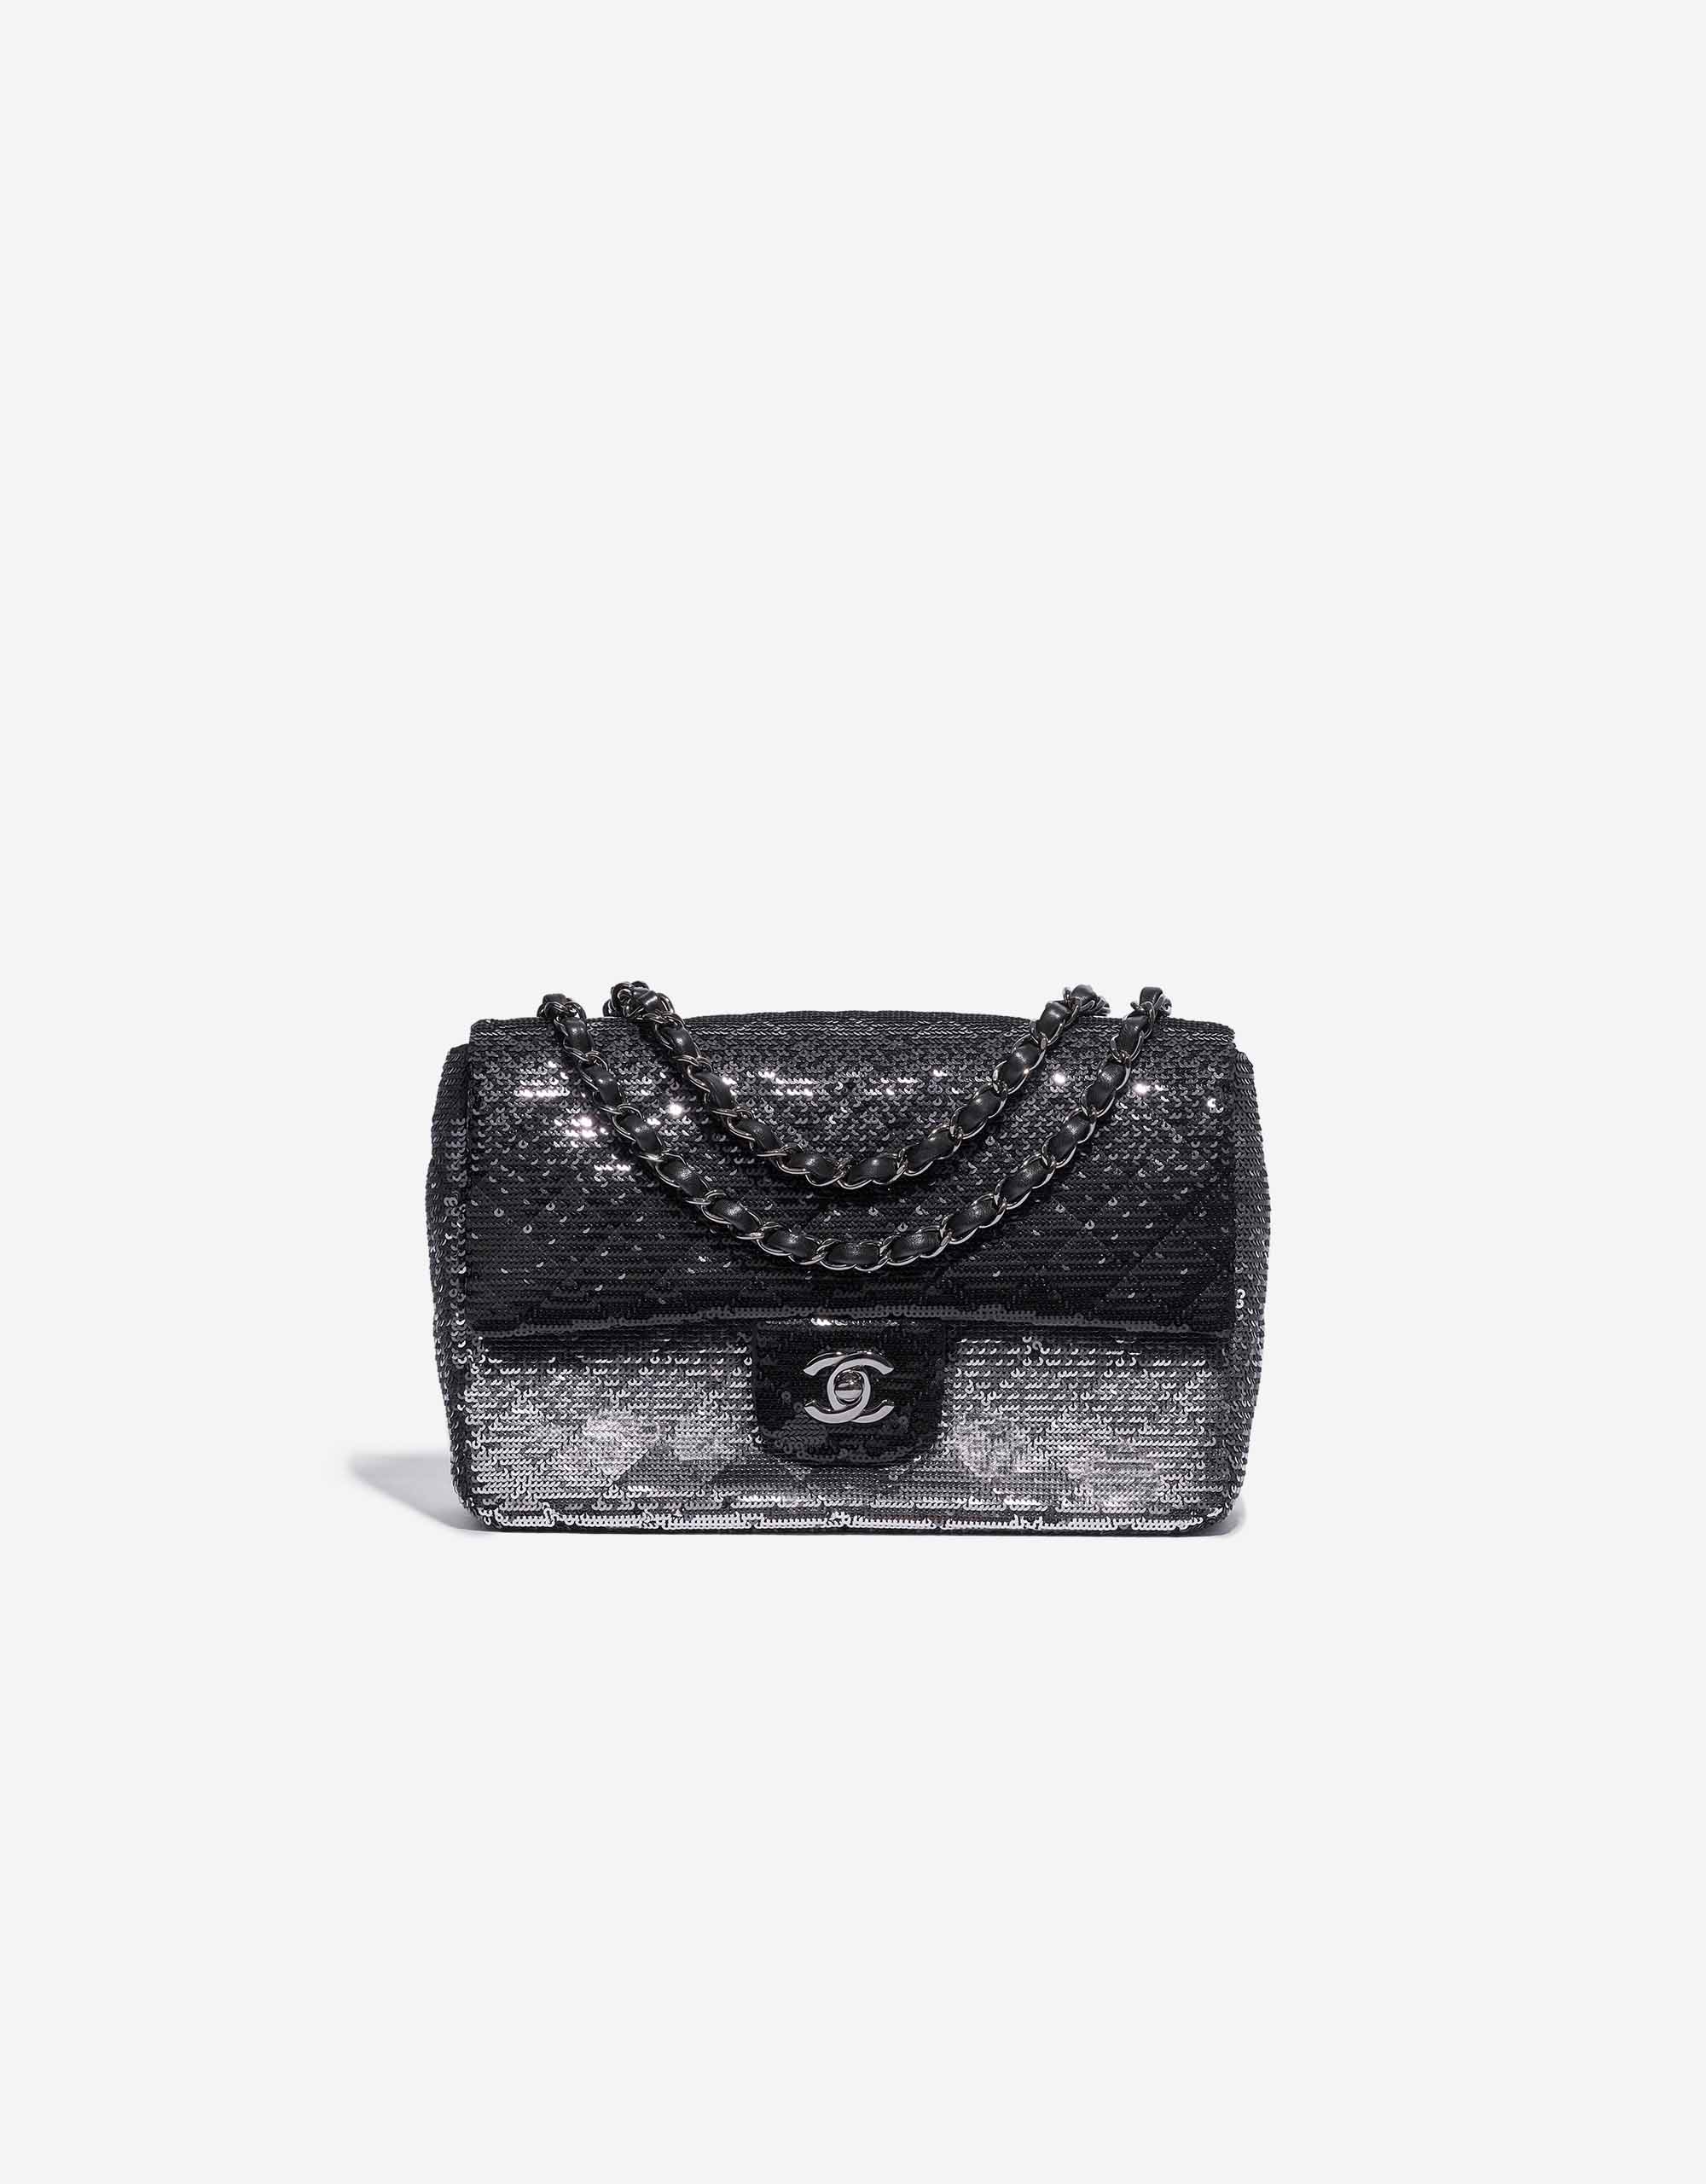 Chanel Timeless Medium Paillette Black / Silver | SACLÀB